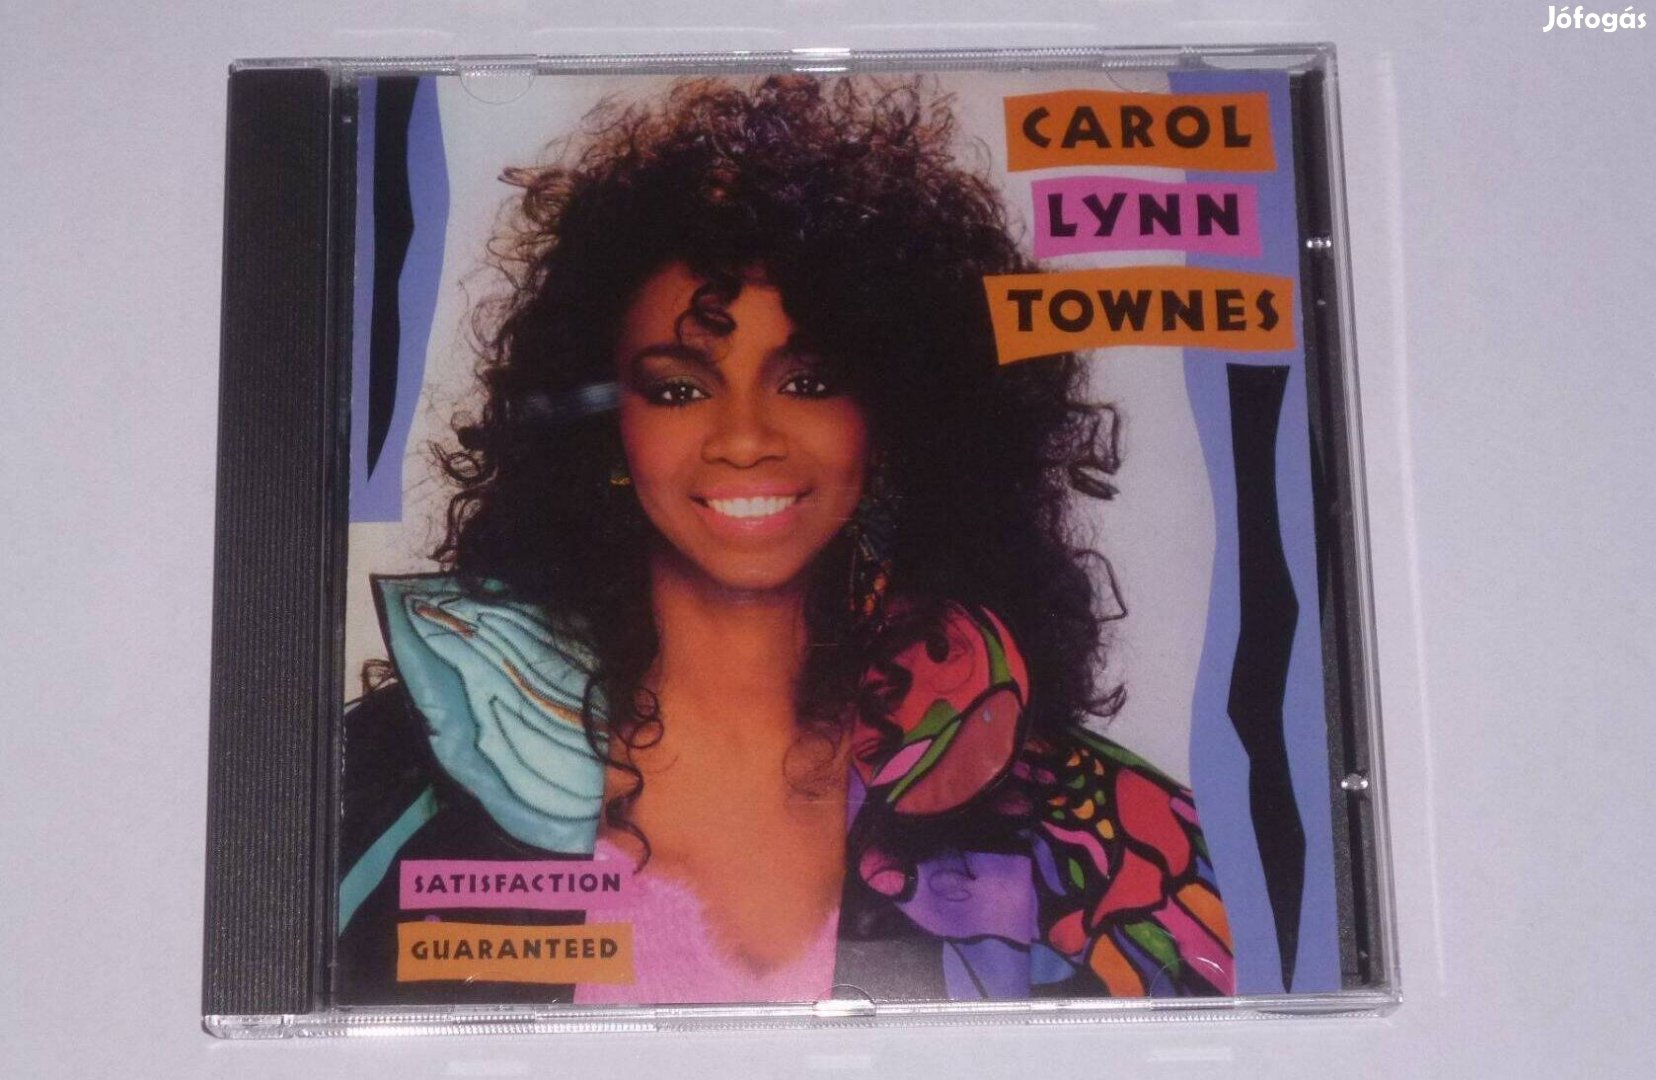 Carol Lynn Townes Satisfaction Guaranteed CD Disco